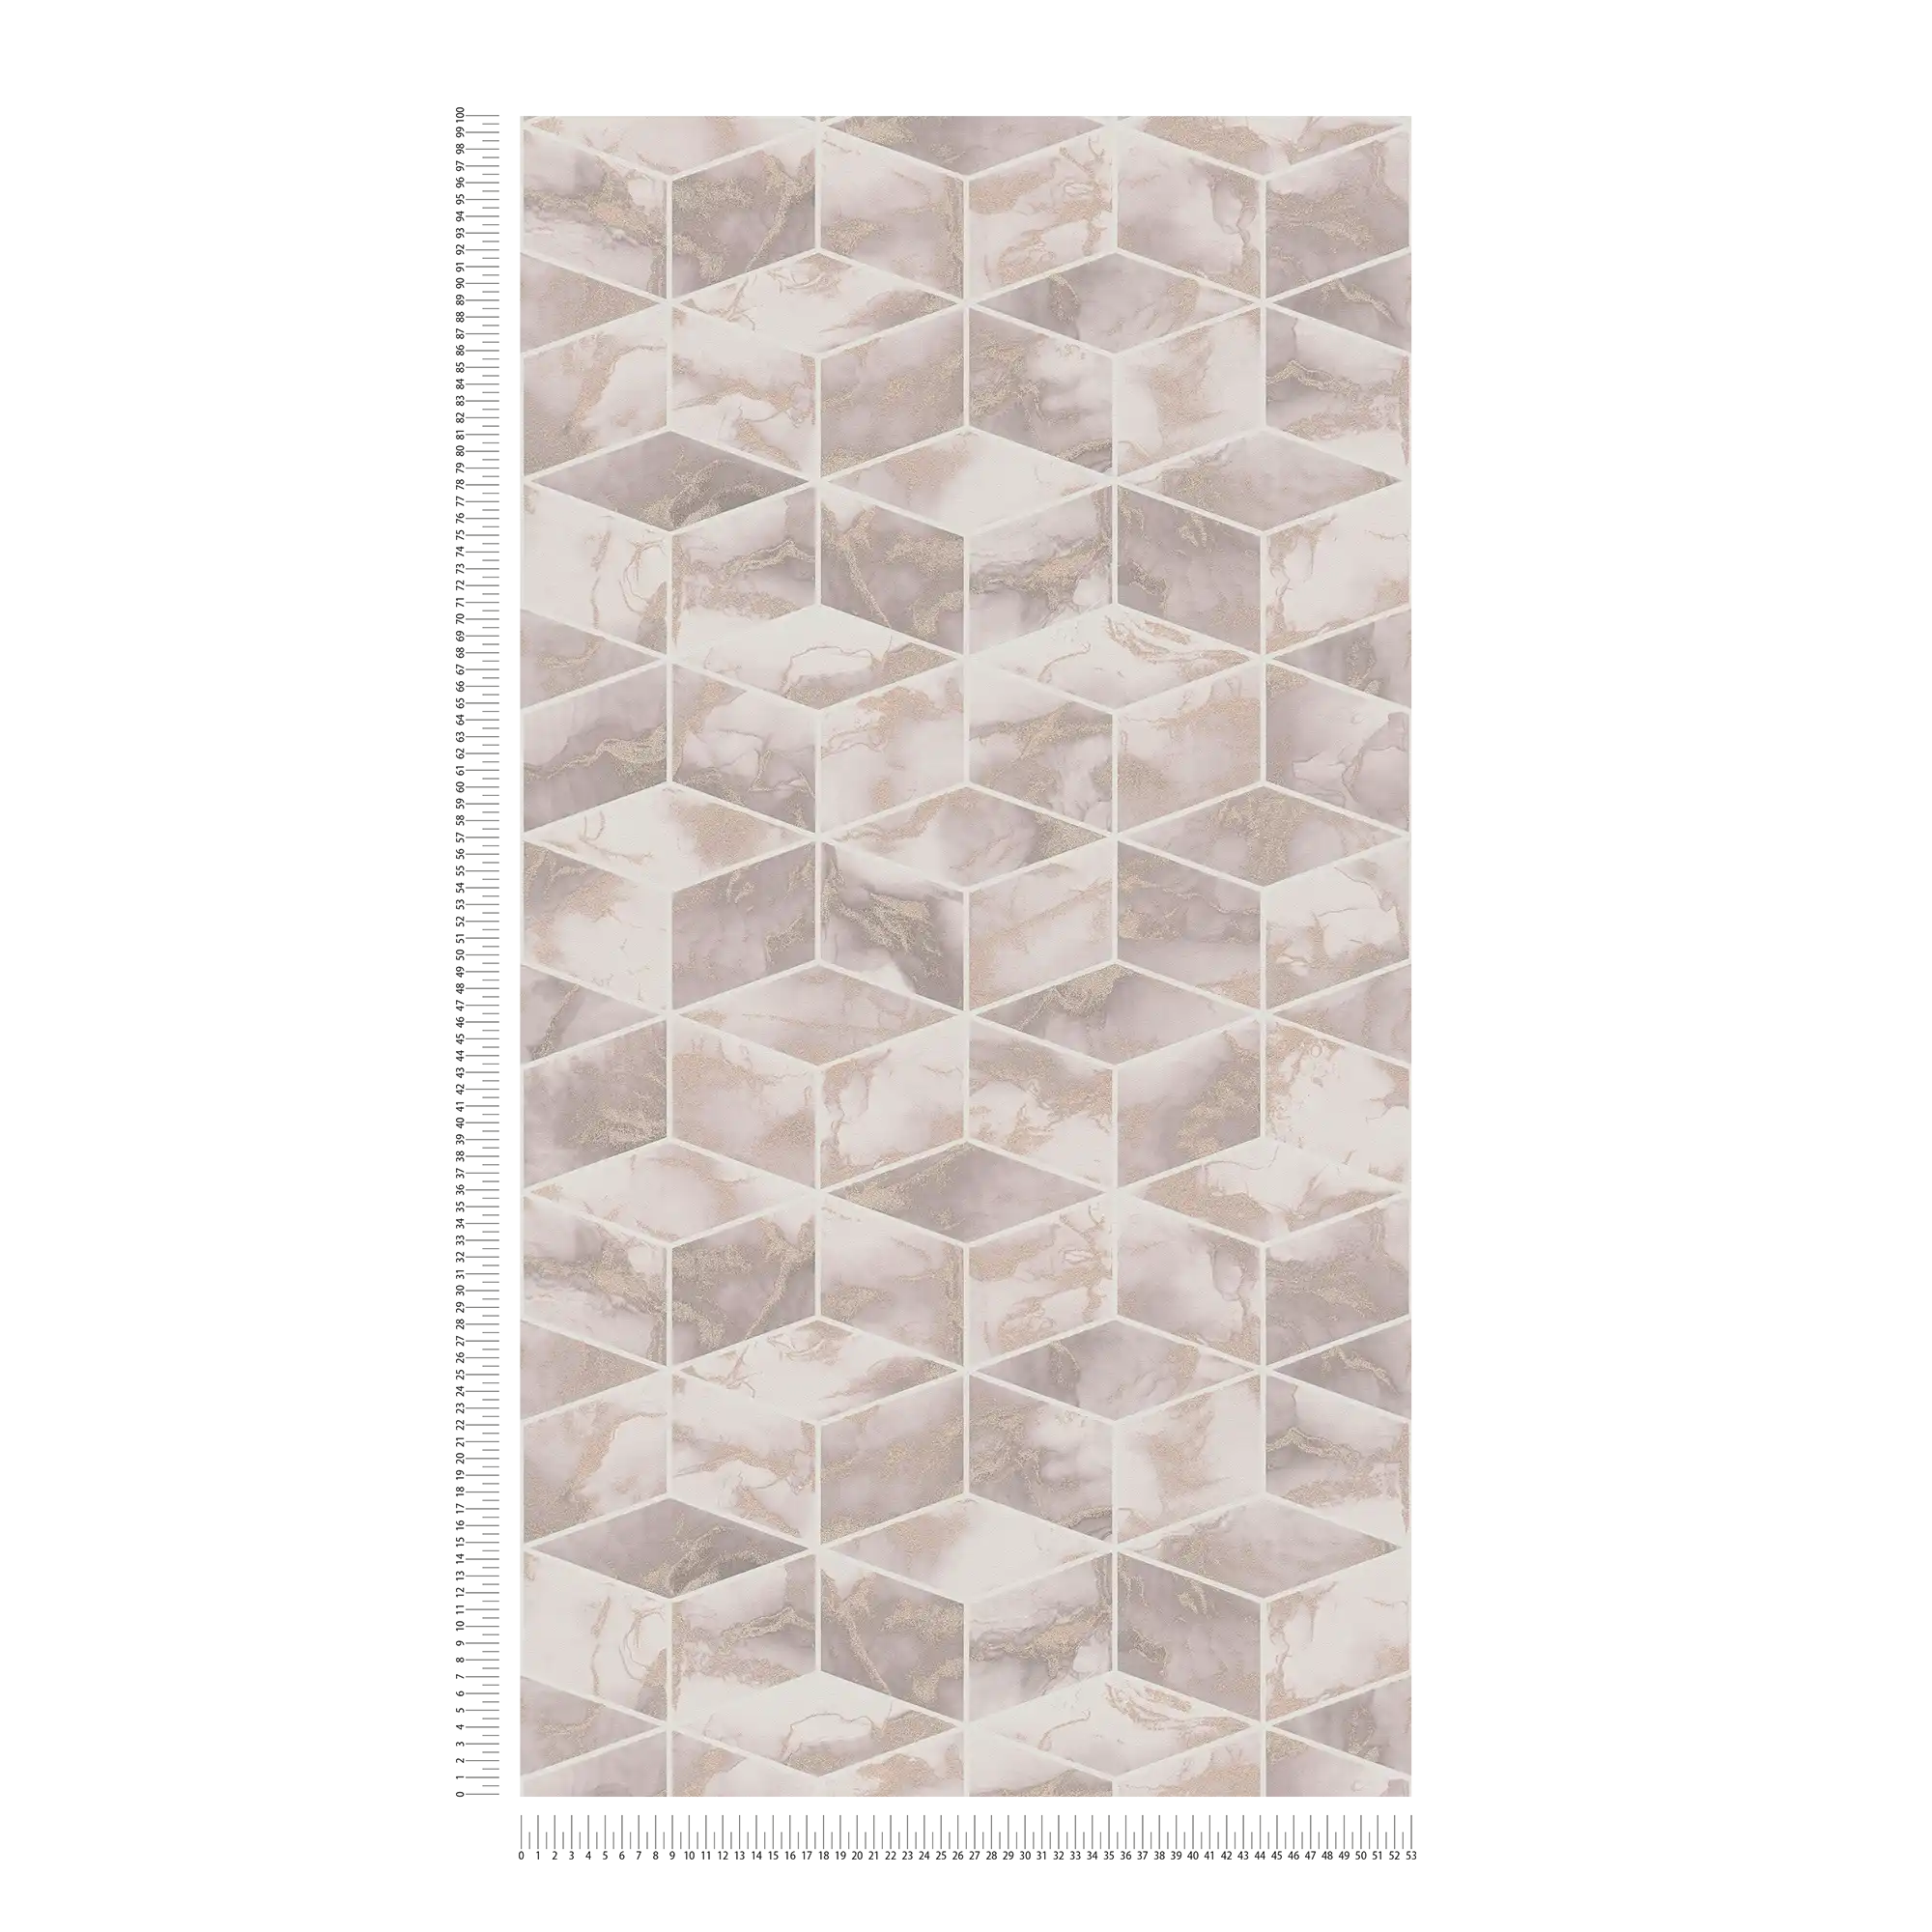             Tile wallpaper with marble & metallic effect - metallic, pink, white
        